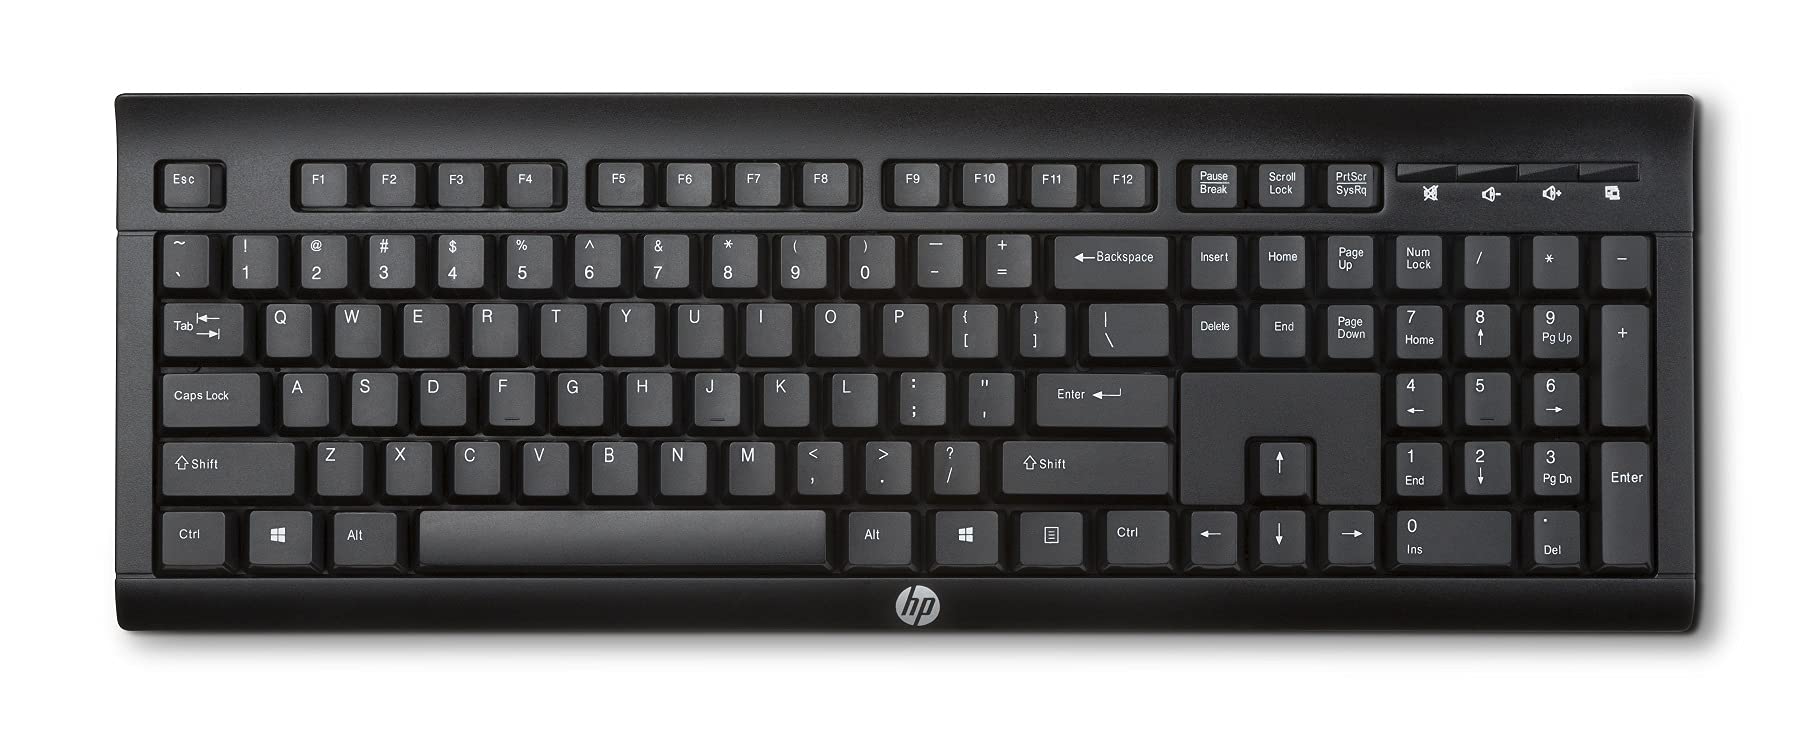 Mua HP K2500 Black  GHz USB Wireless Keyboard (UK Keyboard Layout) - Full  size, Home Office Working for Computer PC Laptop Desktop trên Amazon Anh  chính hãng 2023 | Giaonhan247